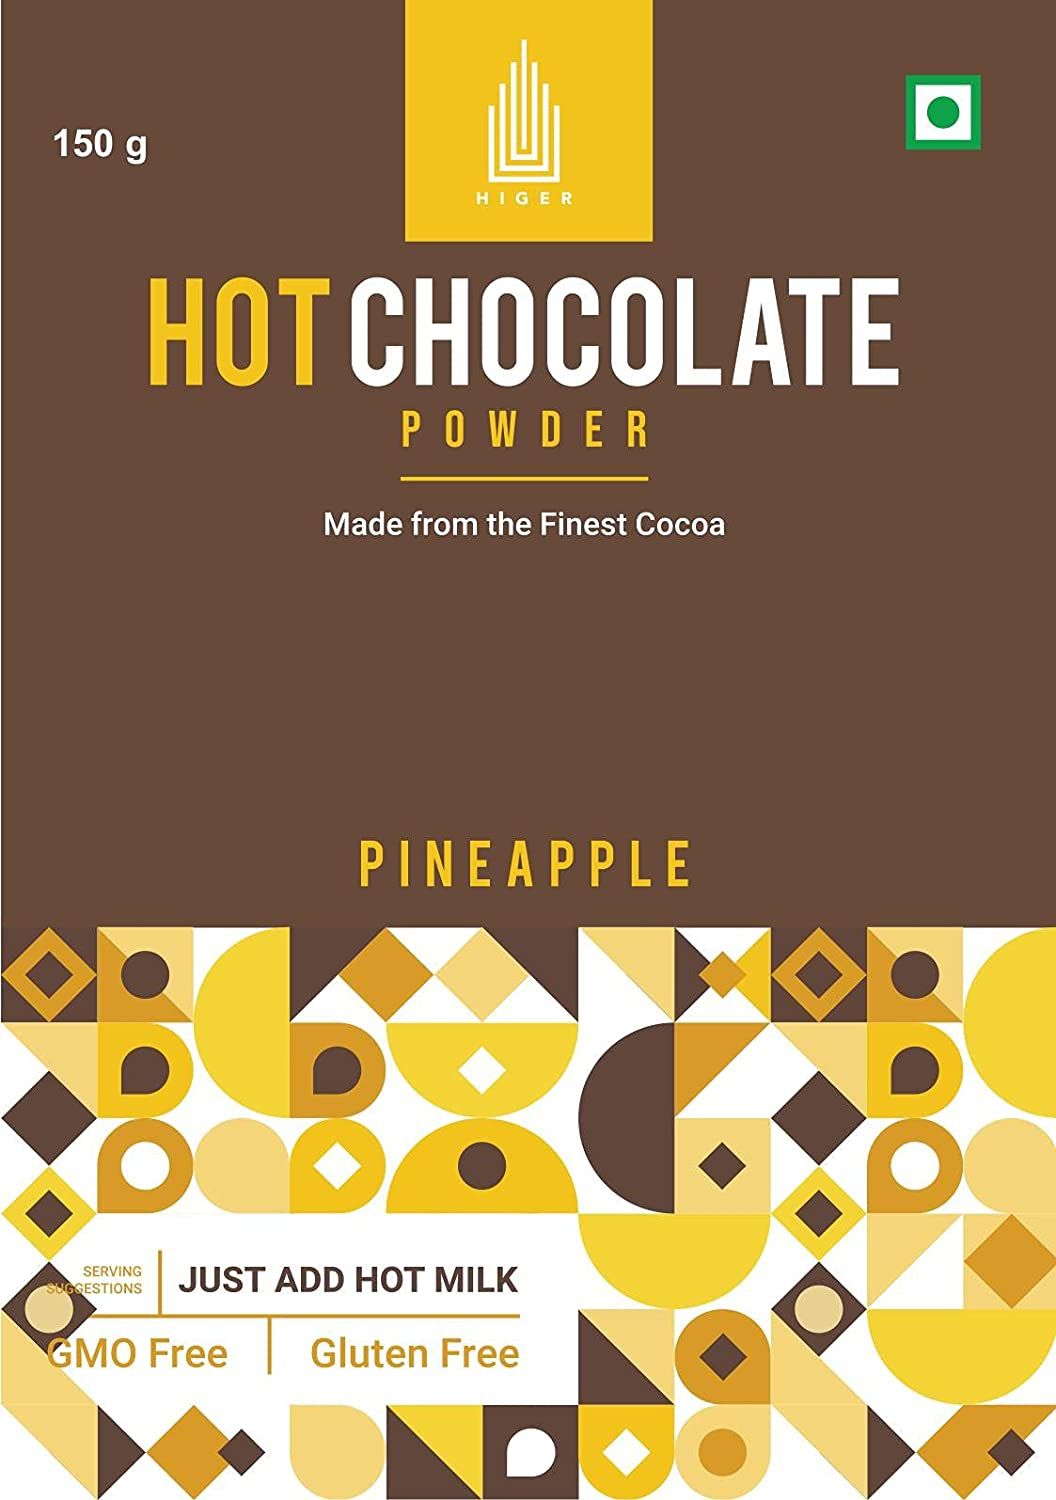 Higer Hot Chocolate Pineapple Powder Image